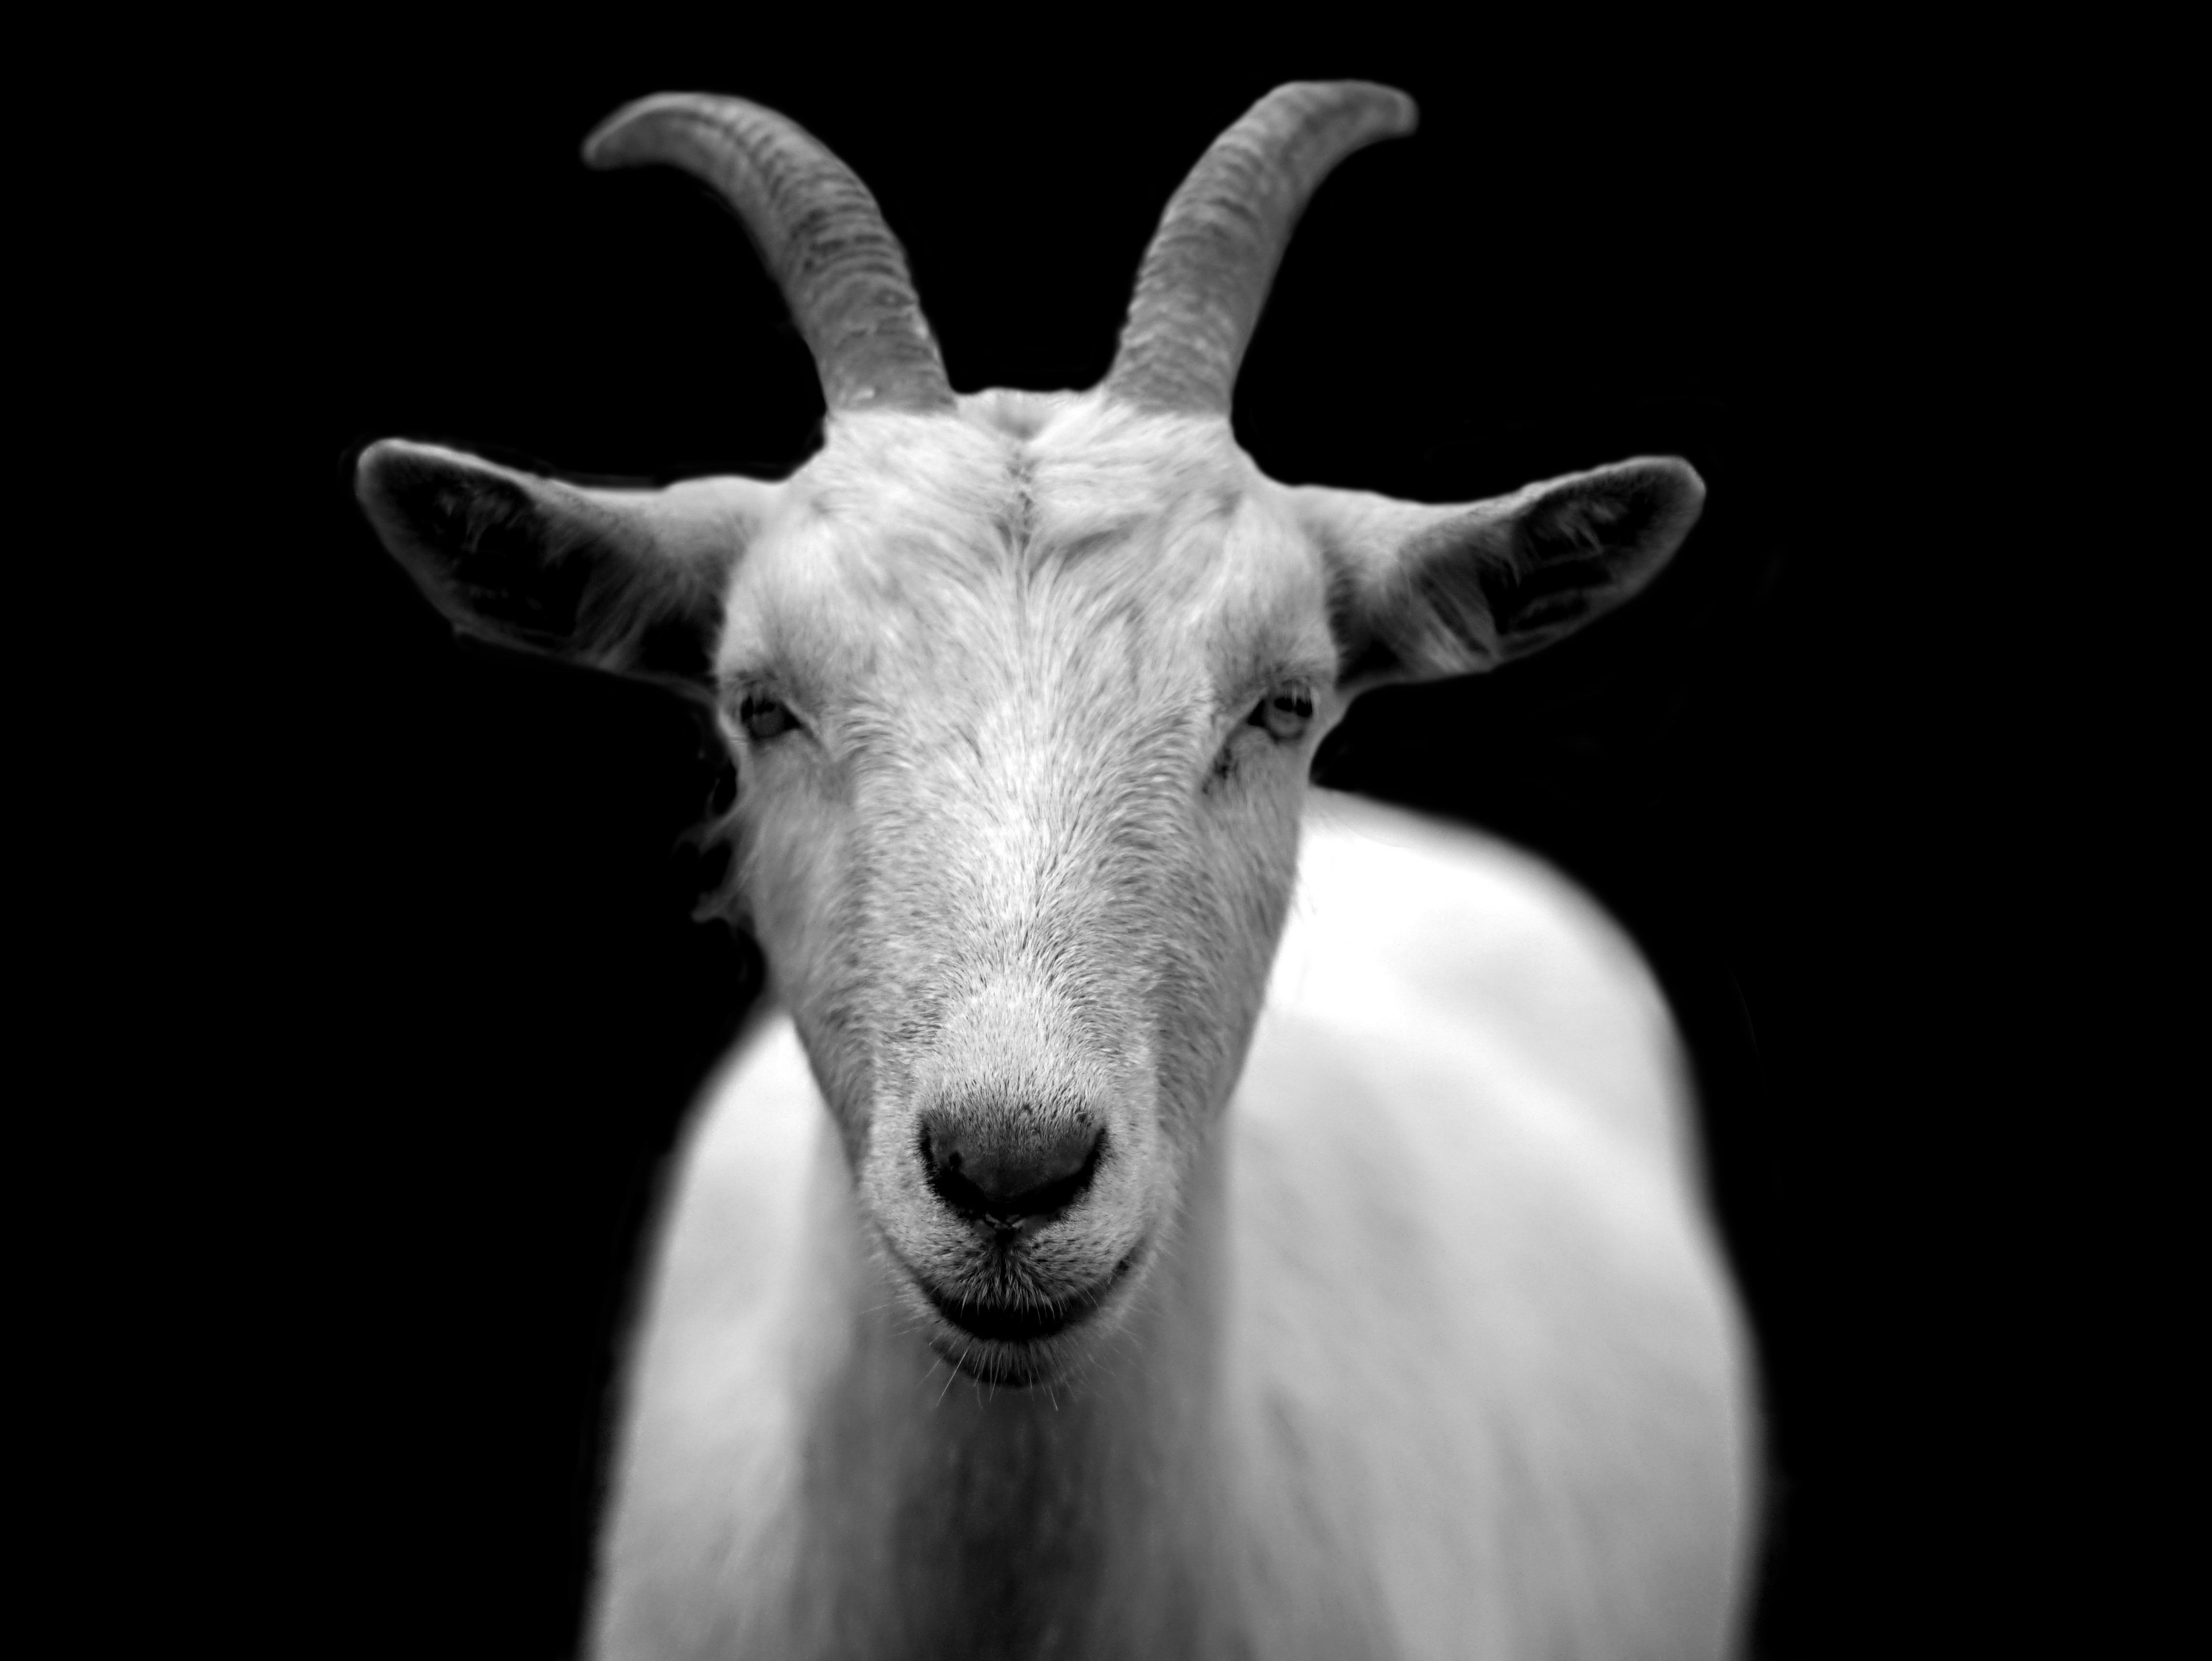 https://images.pexels.com/photos/86594/goat-animal-horns-black-and-white-86594.jpeg?cs=srgb&dl=pexels-pixabay-86594.jpg&fm=jpg